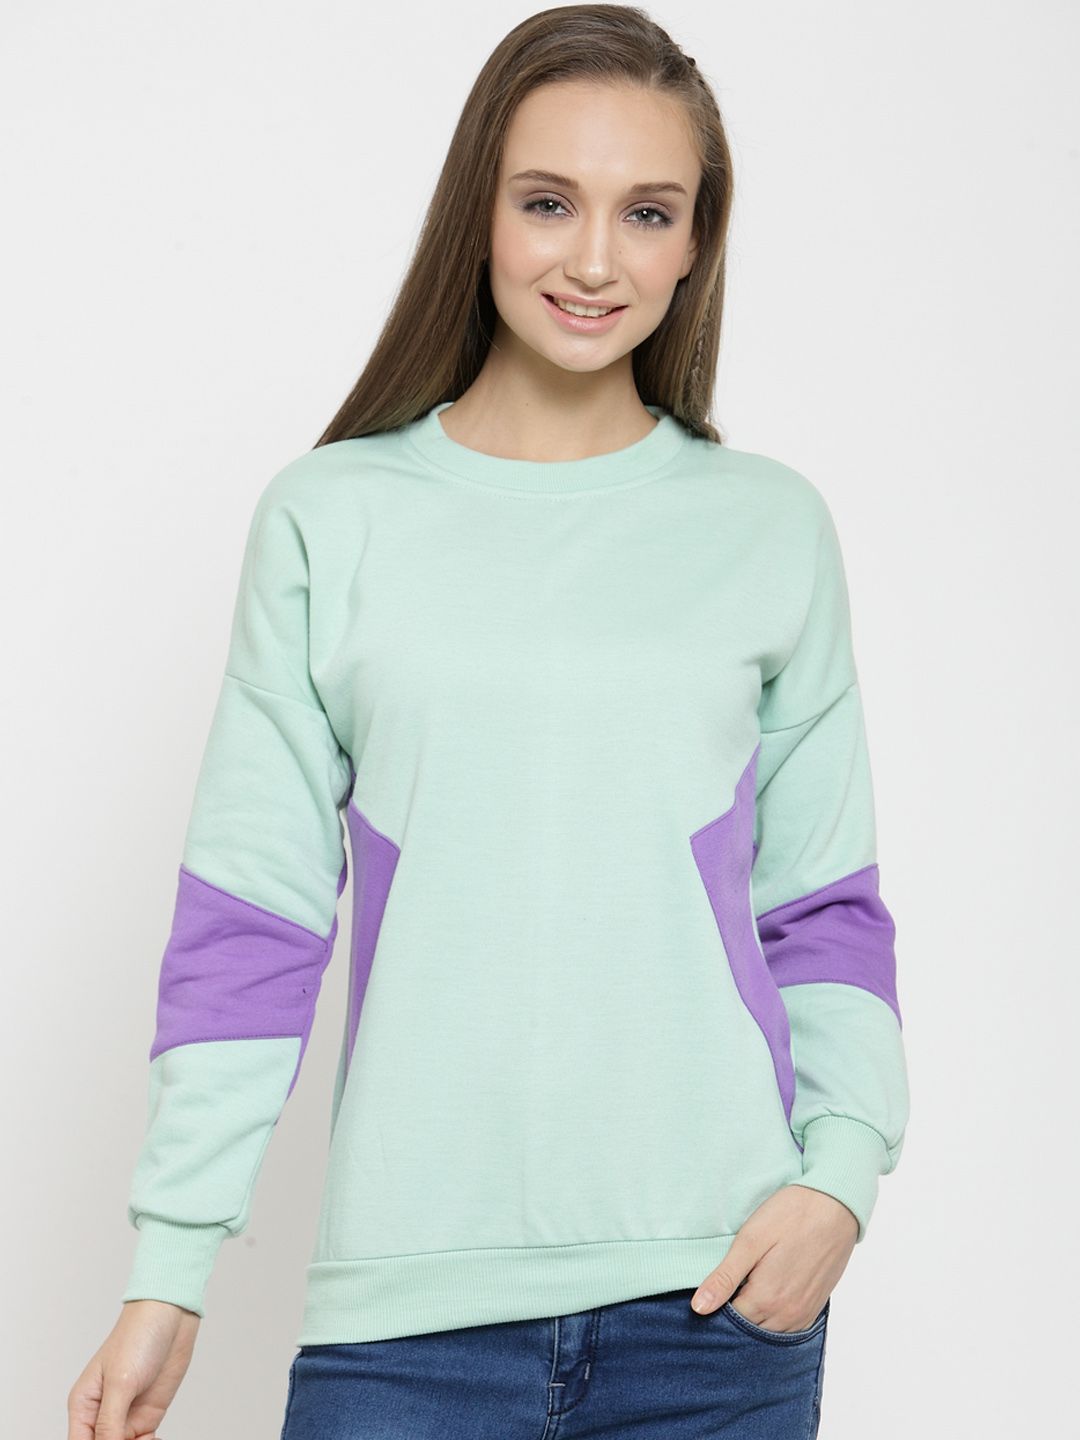 Belle Fille Women Sea Green & Purple Colourblocked Sweatshirt Price in India